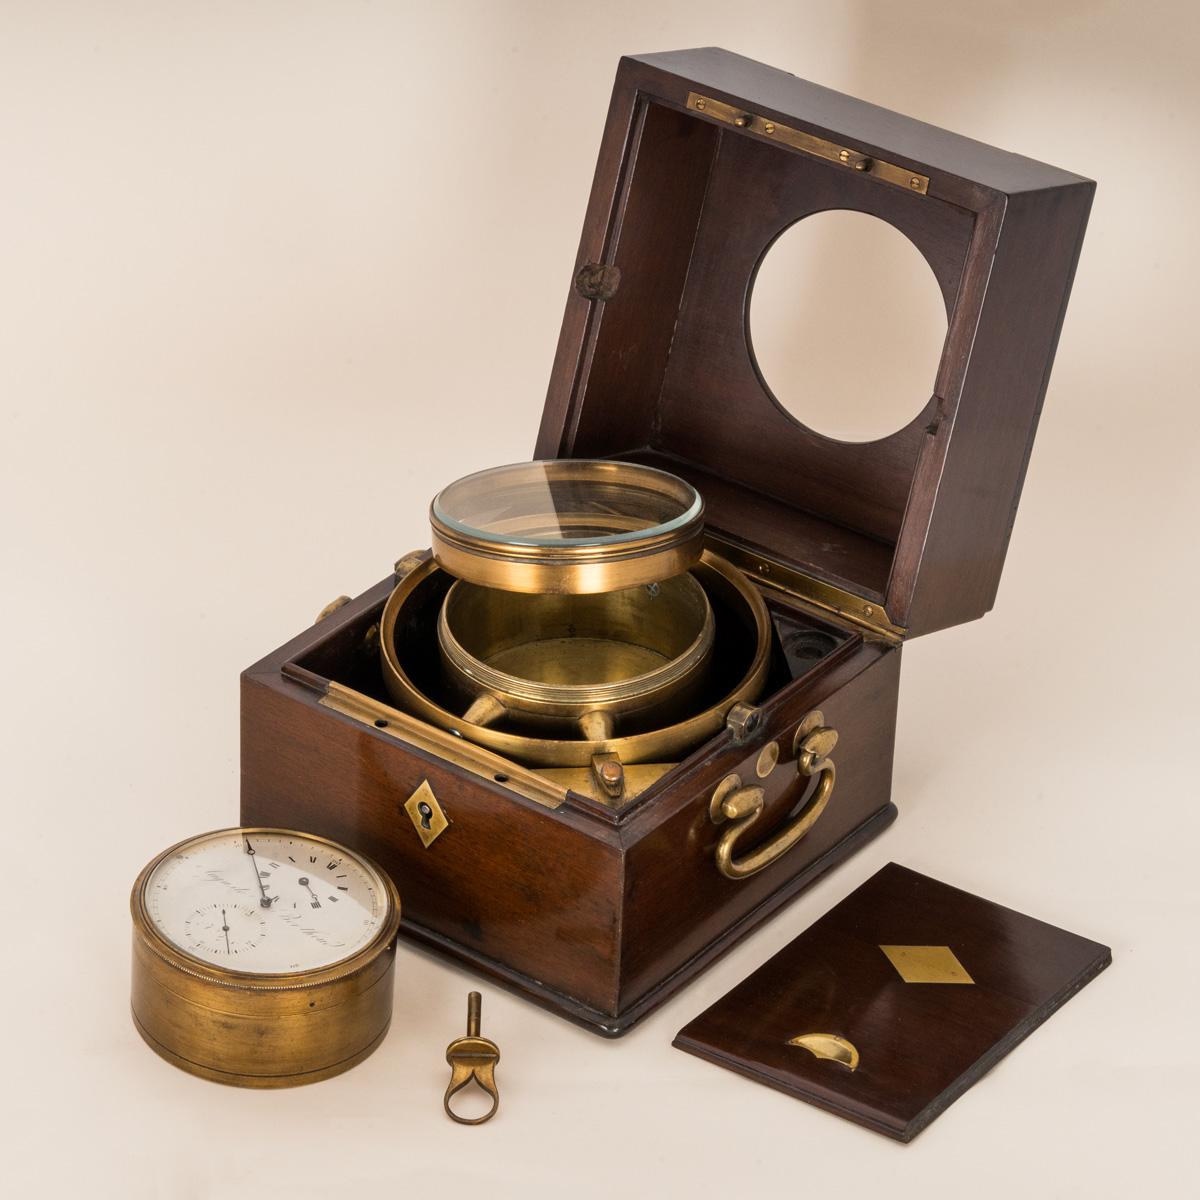 Auguste Berthoud. A Rare Antique Experimental Marine Chronometer C1840 For Sale 5